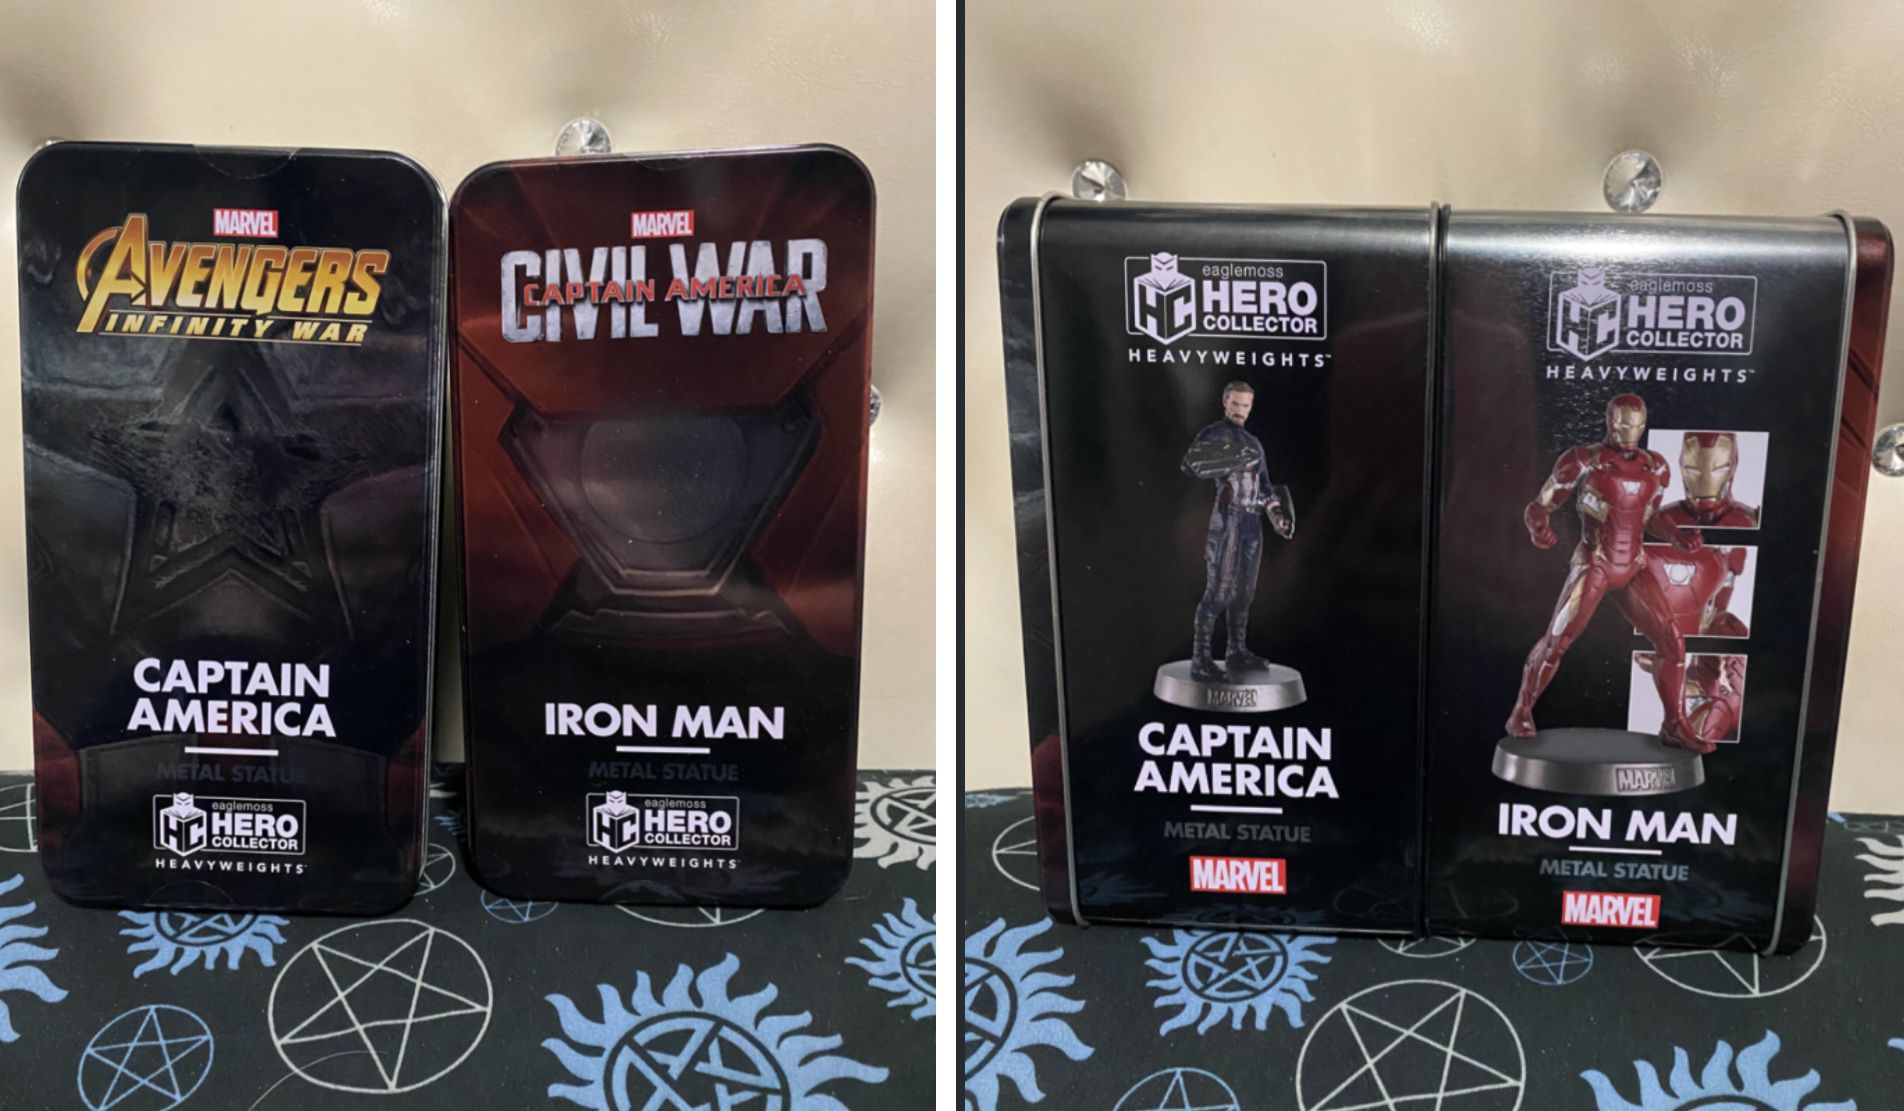 Disney The Avengers Iron Man Captain America Metal Statues Figurines